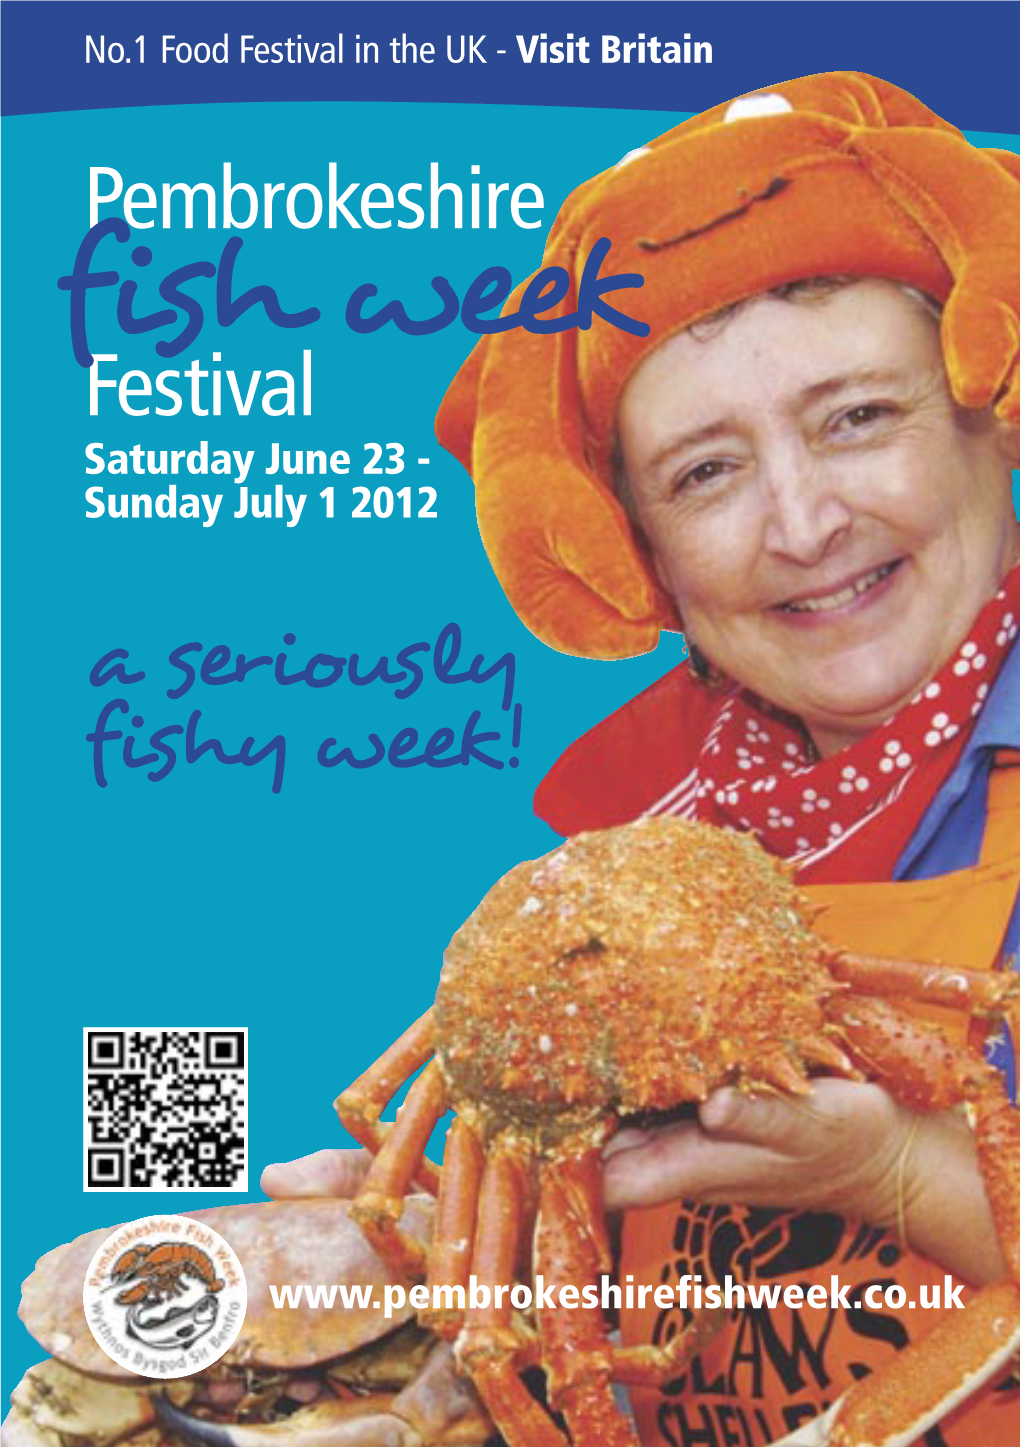 Pembrokeshire Fish Week Festival Saturday June 23 - Sunday July 1 2012